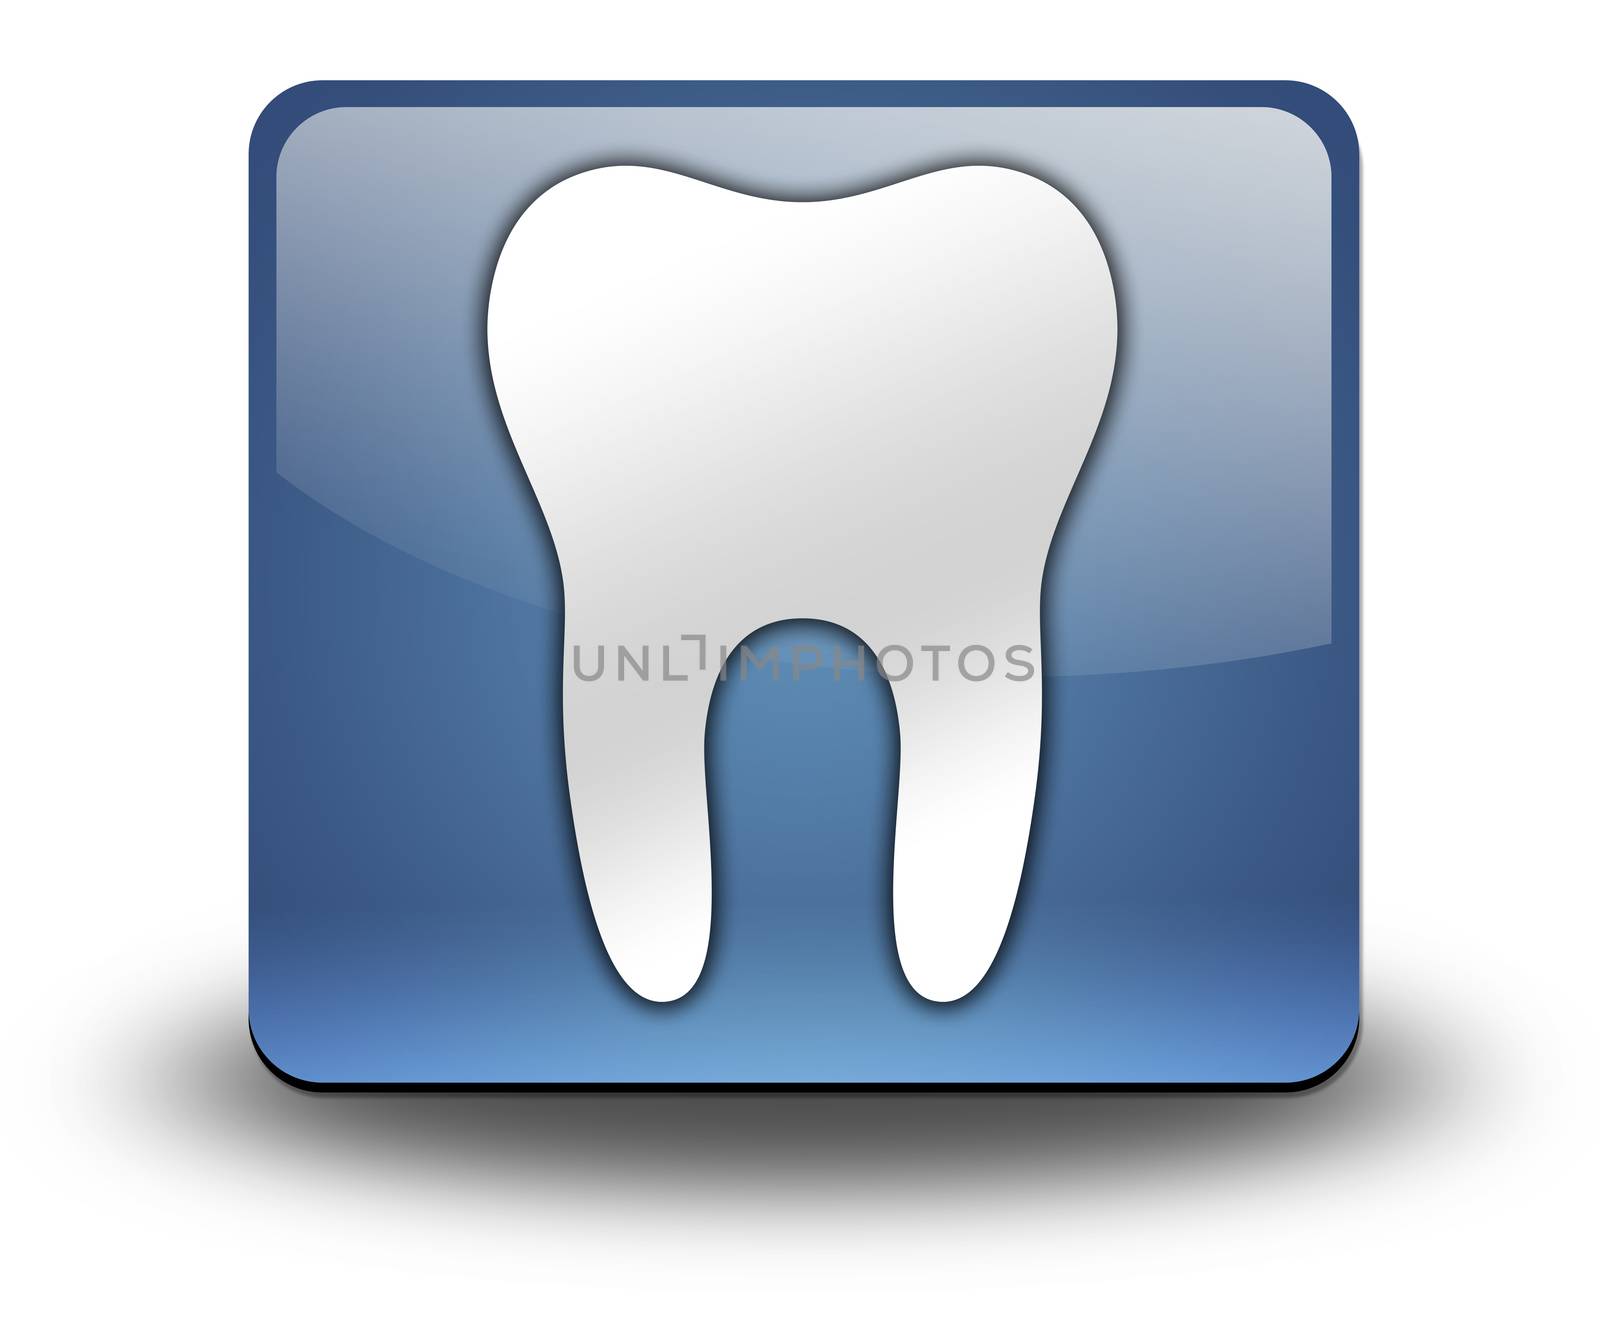 Icon, Button, Pictogram -Dentist, Dentistry-